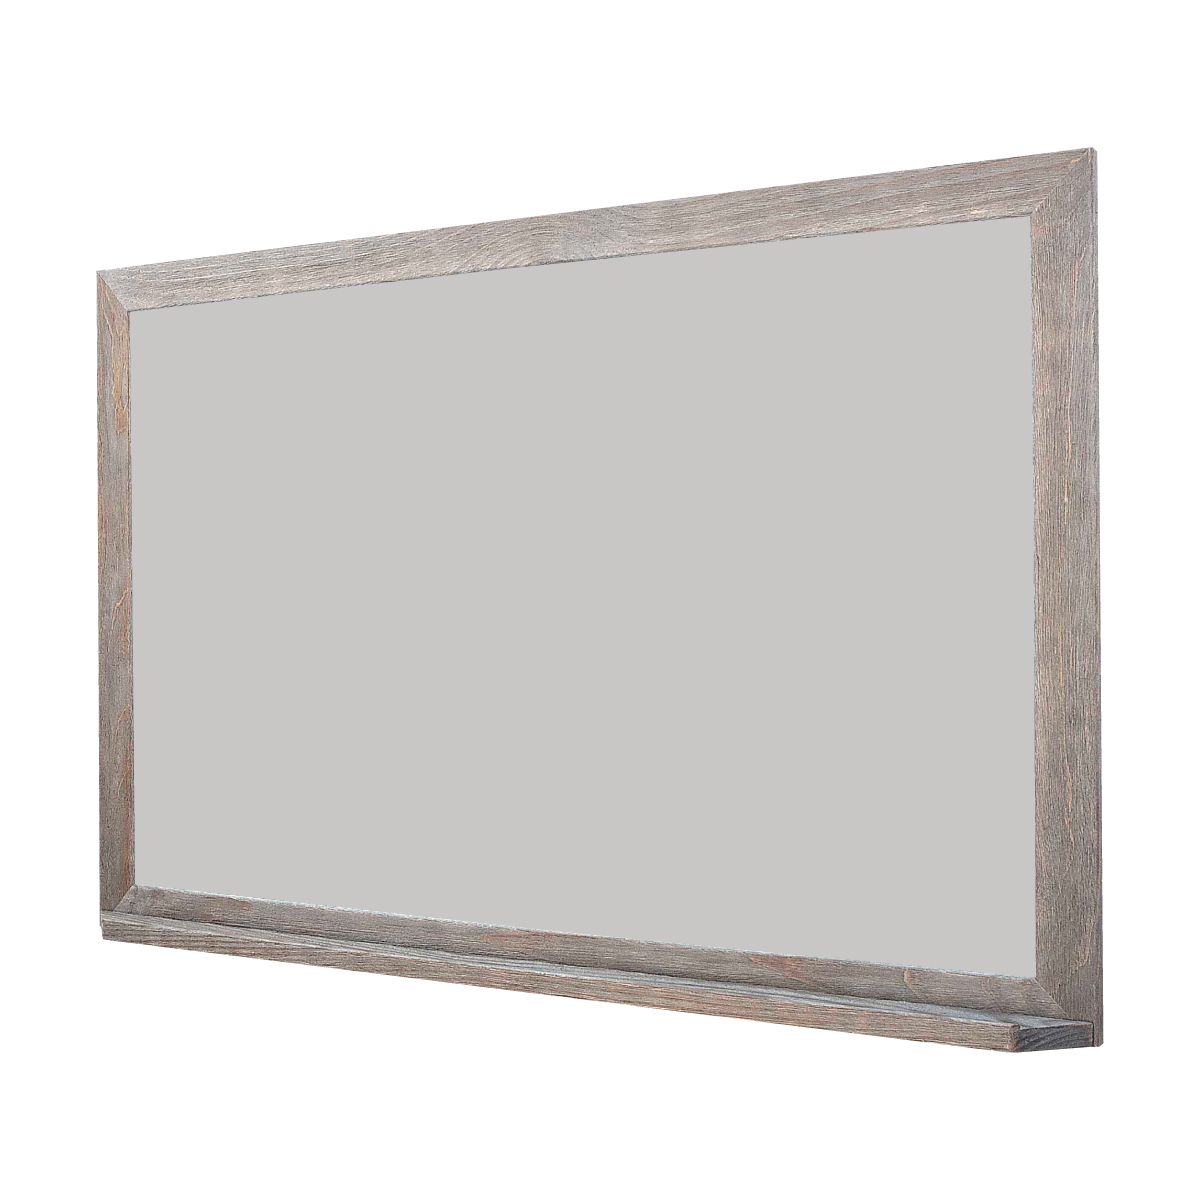 Barnwood Wood Frame | Silver Star | Landscape Color-Rite Non-Magnetic Whiteboard